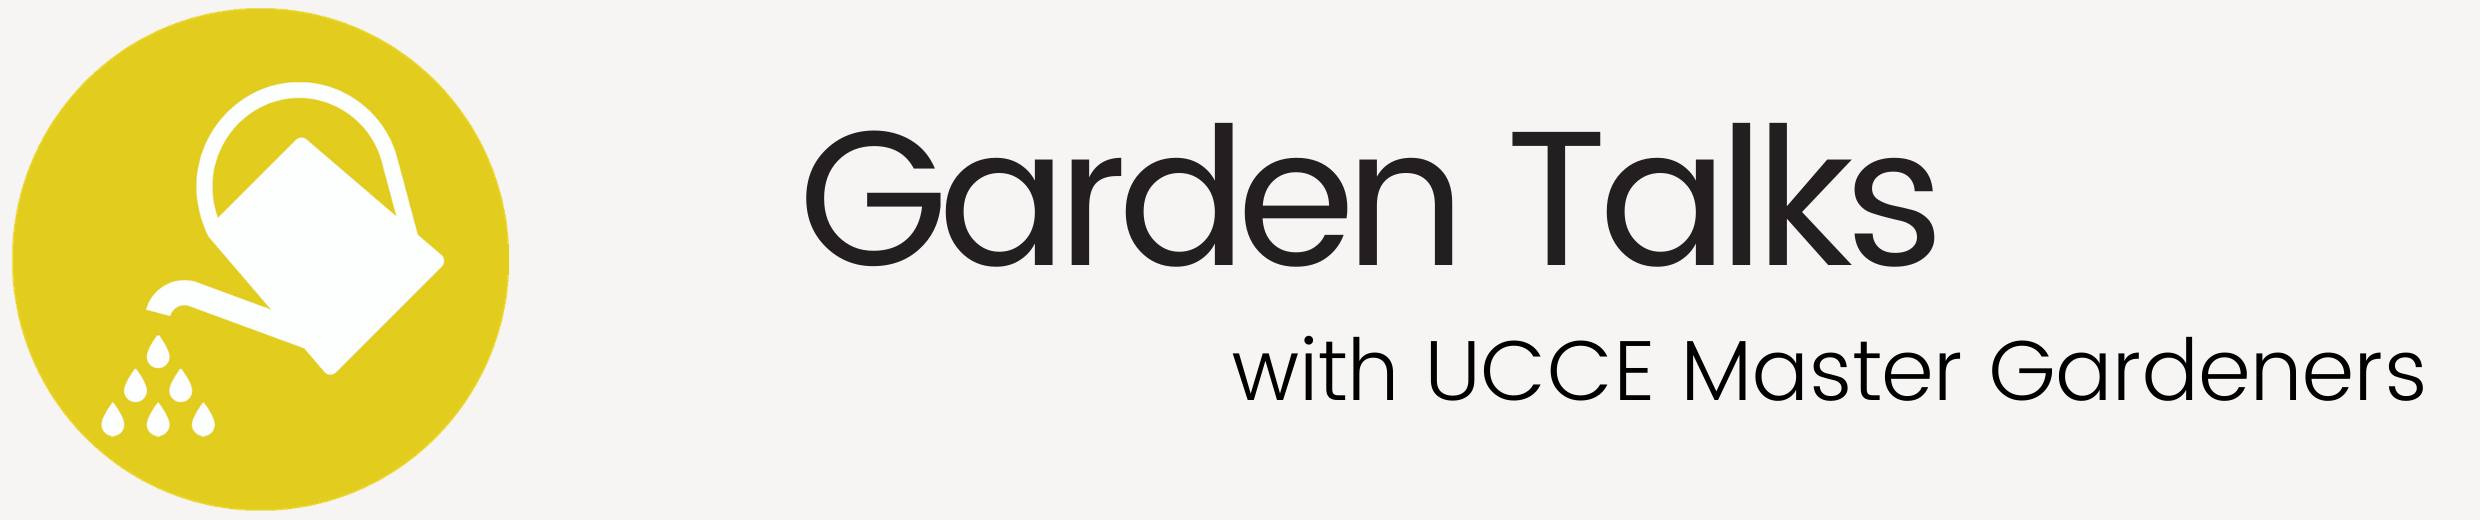 Garding Talks with University of California's Cooperative Extension's Master Gardeners